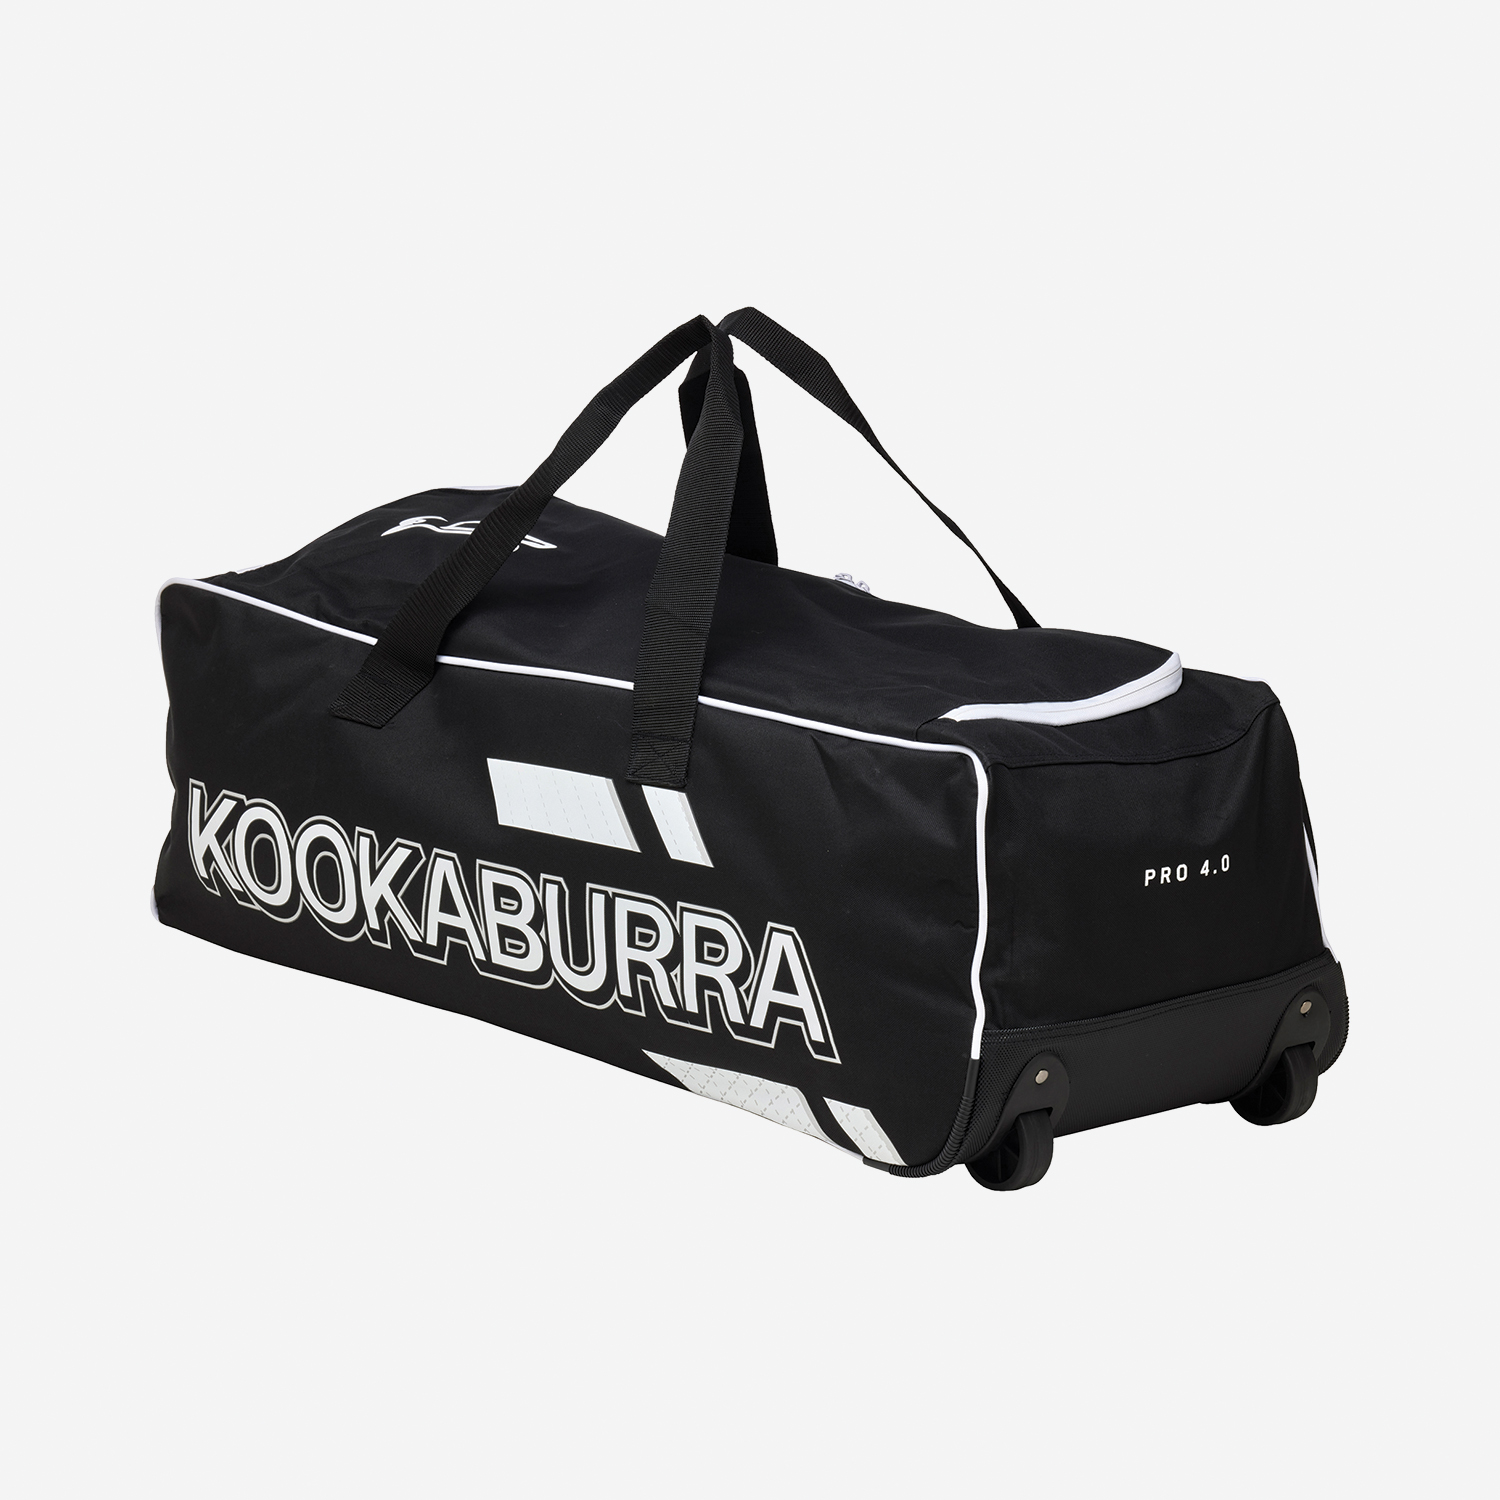 Pro 4.0 Wheelie Cricket Bag